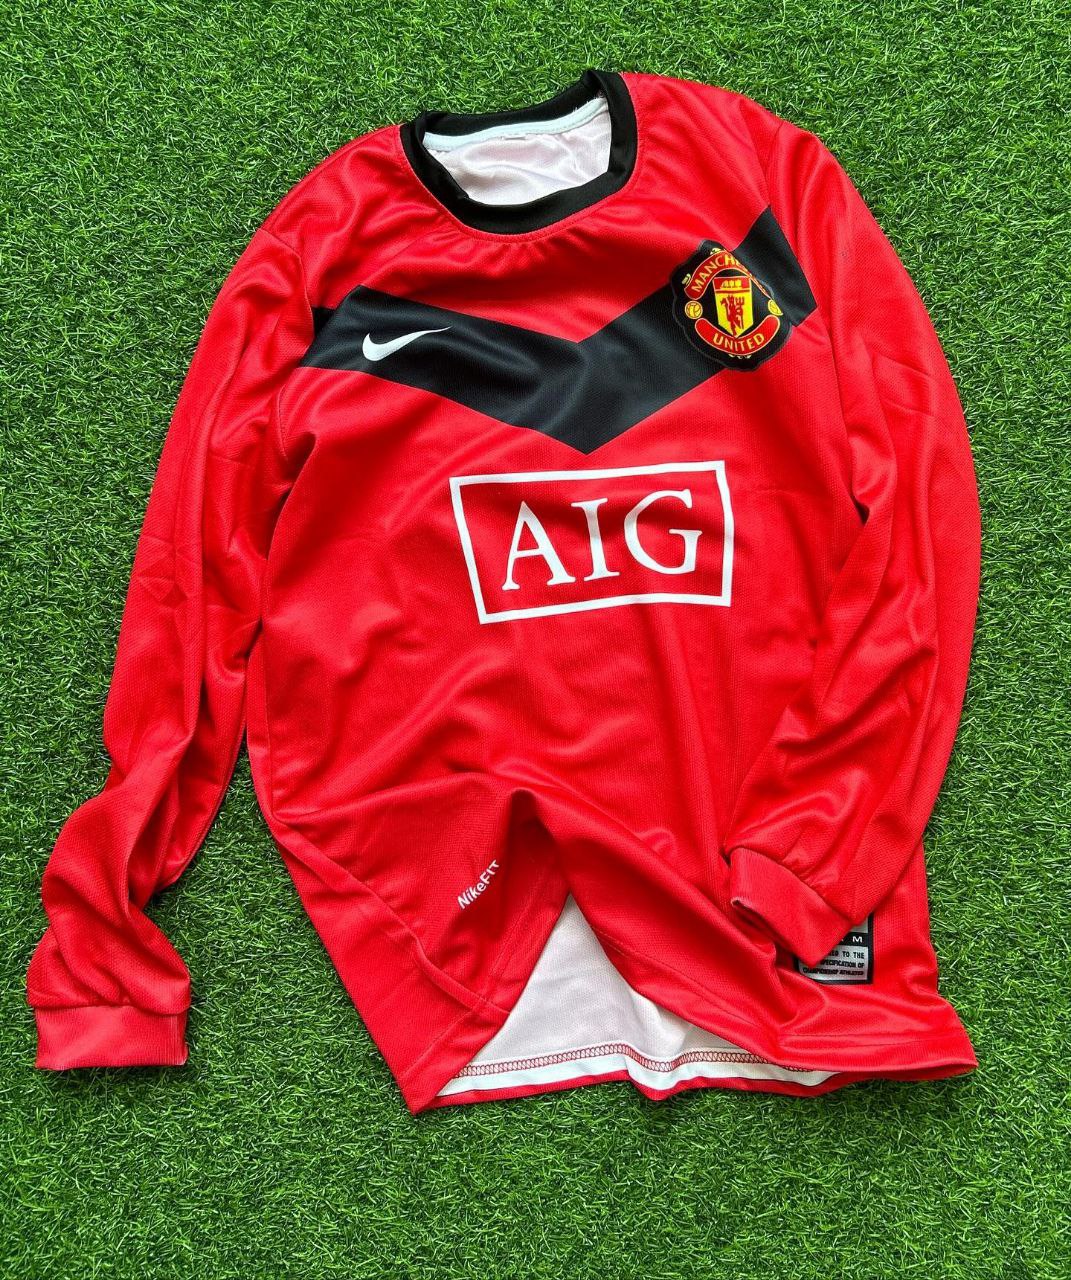 Wayne Rooney Manchester United Red Retro Jersey